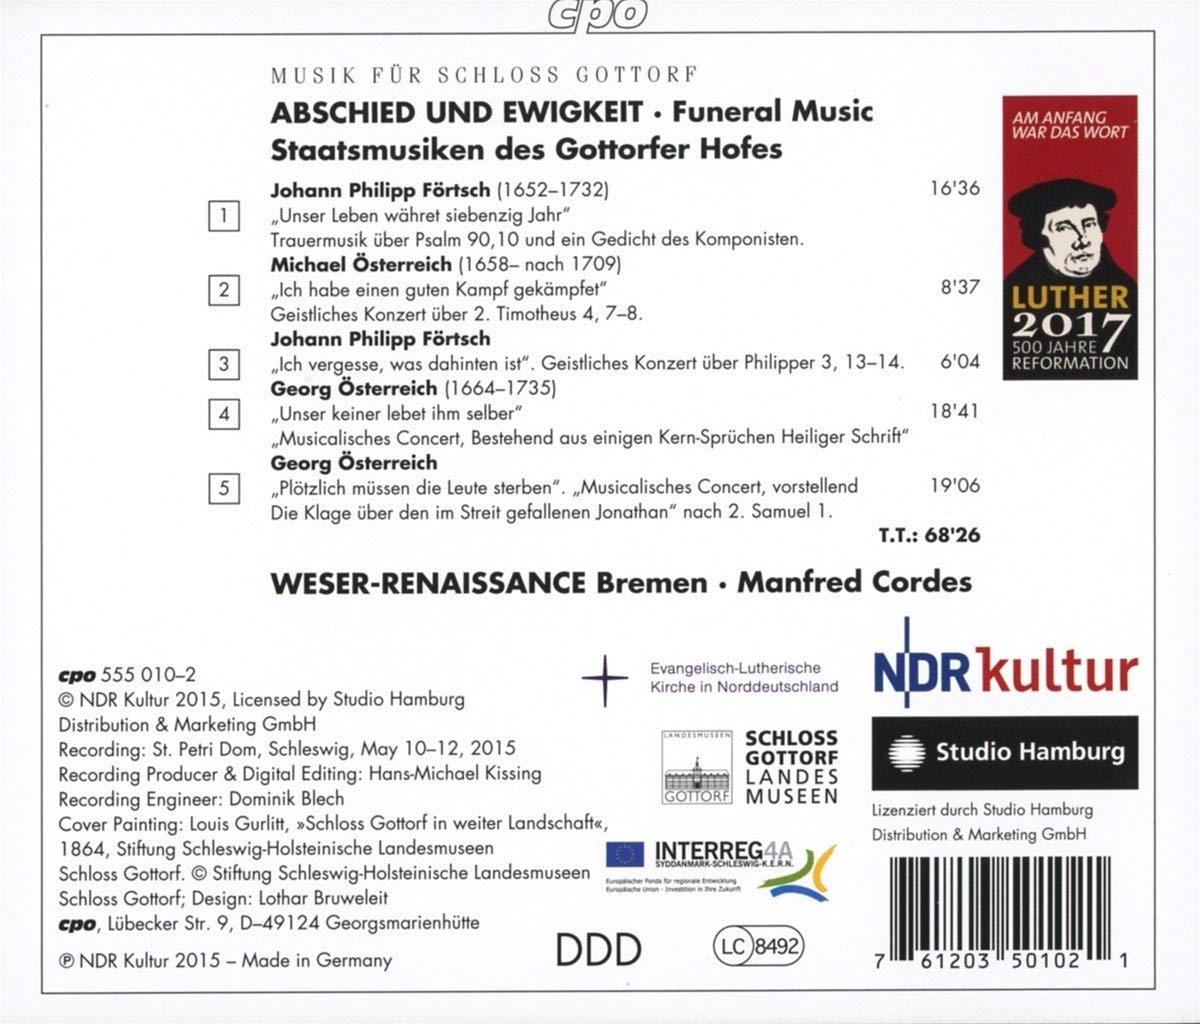 Funeral Music for Schloss Gottorf - Österreich, Michael & Georg; Förtsch, Johann Philipp - slide-1